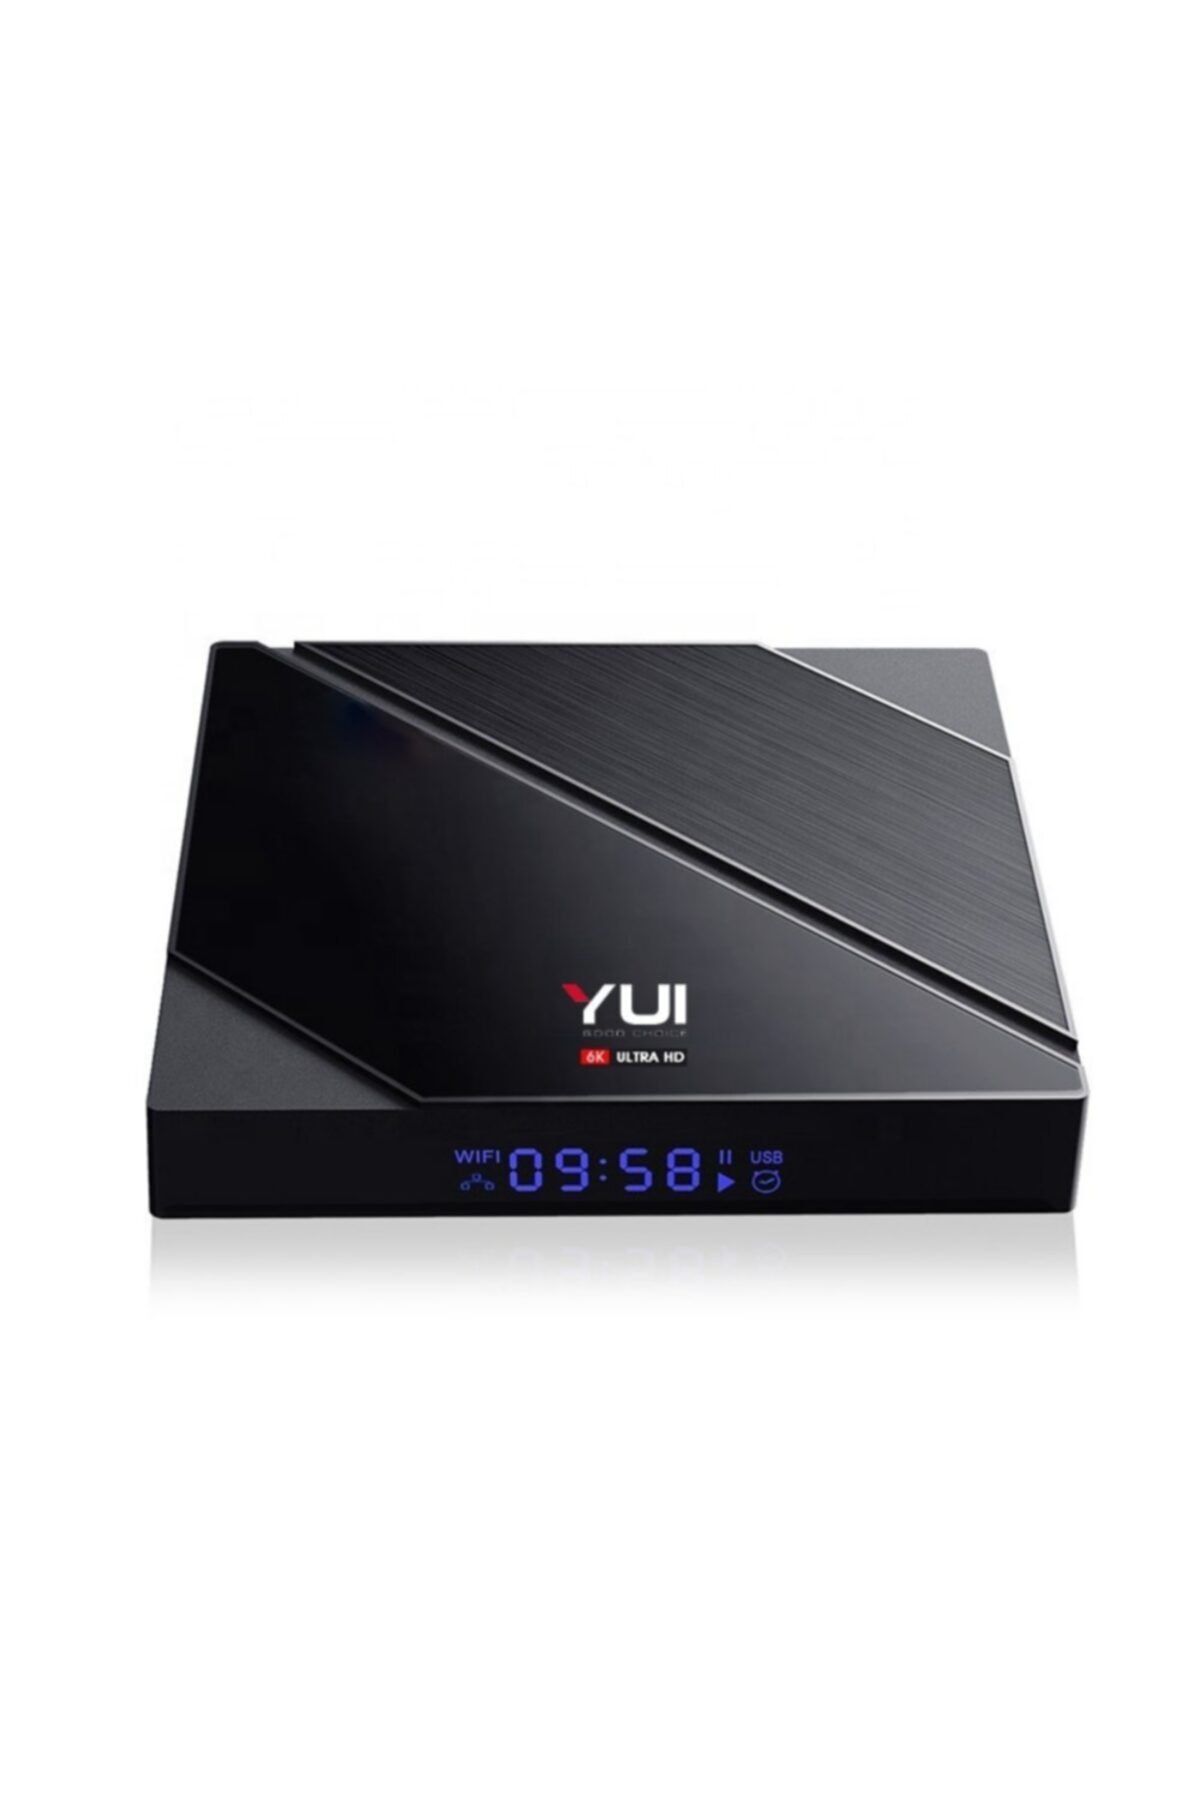 Yui TB-01X 6k Ultra Hd Android Tv Box